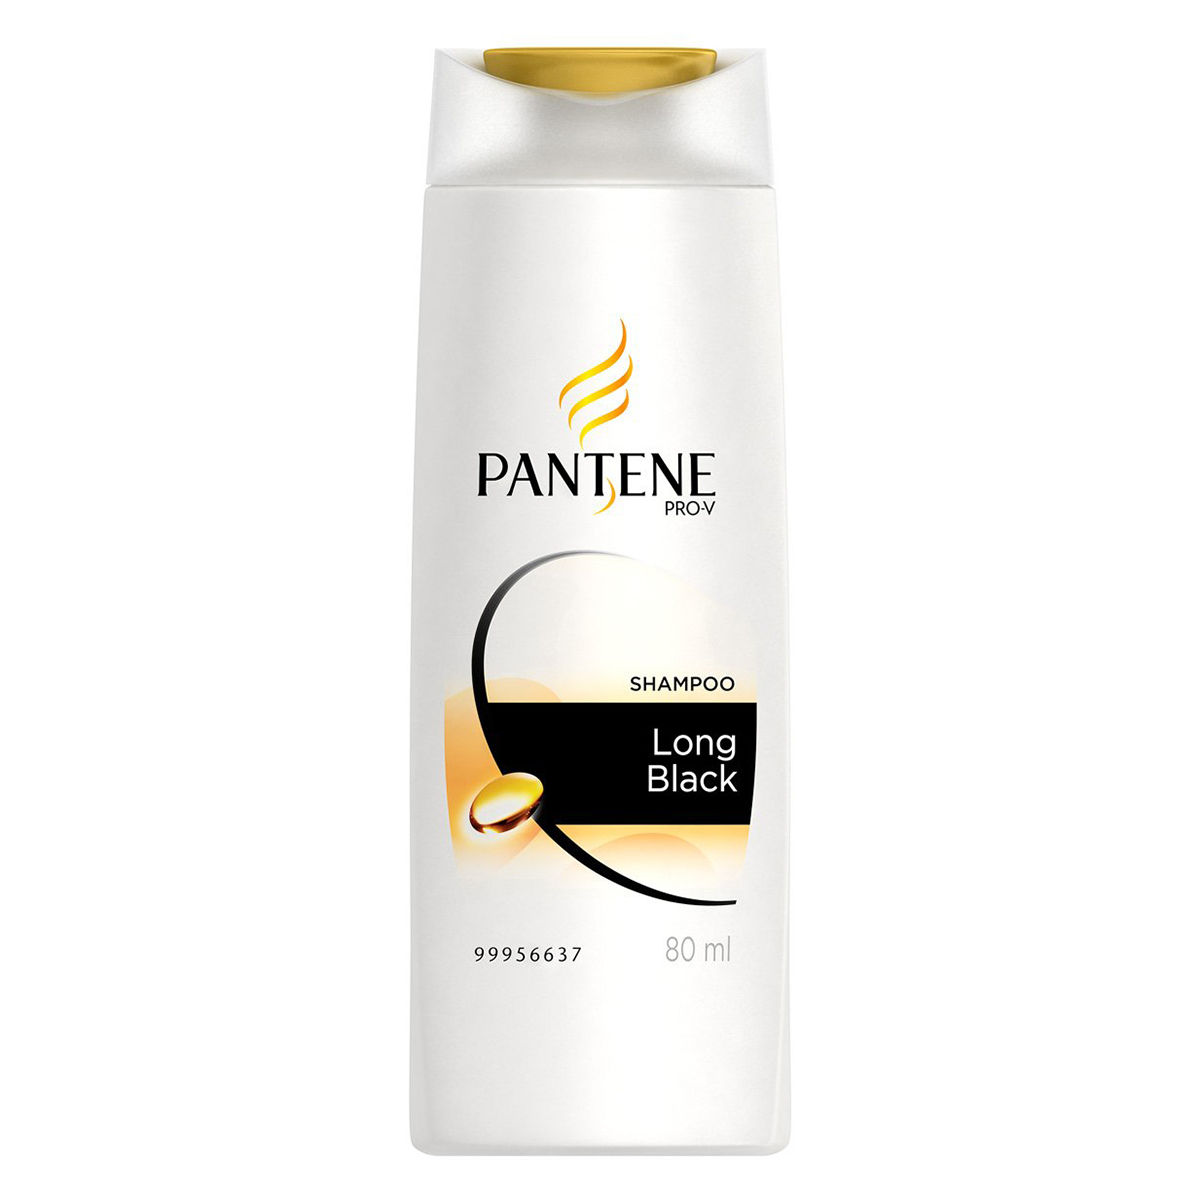 Buy Pantene Pro-V Long Black Shampoo, 80 ml Online